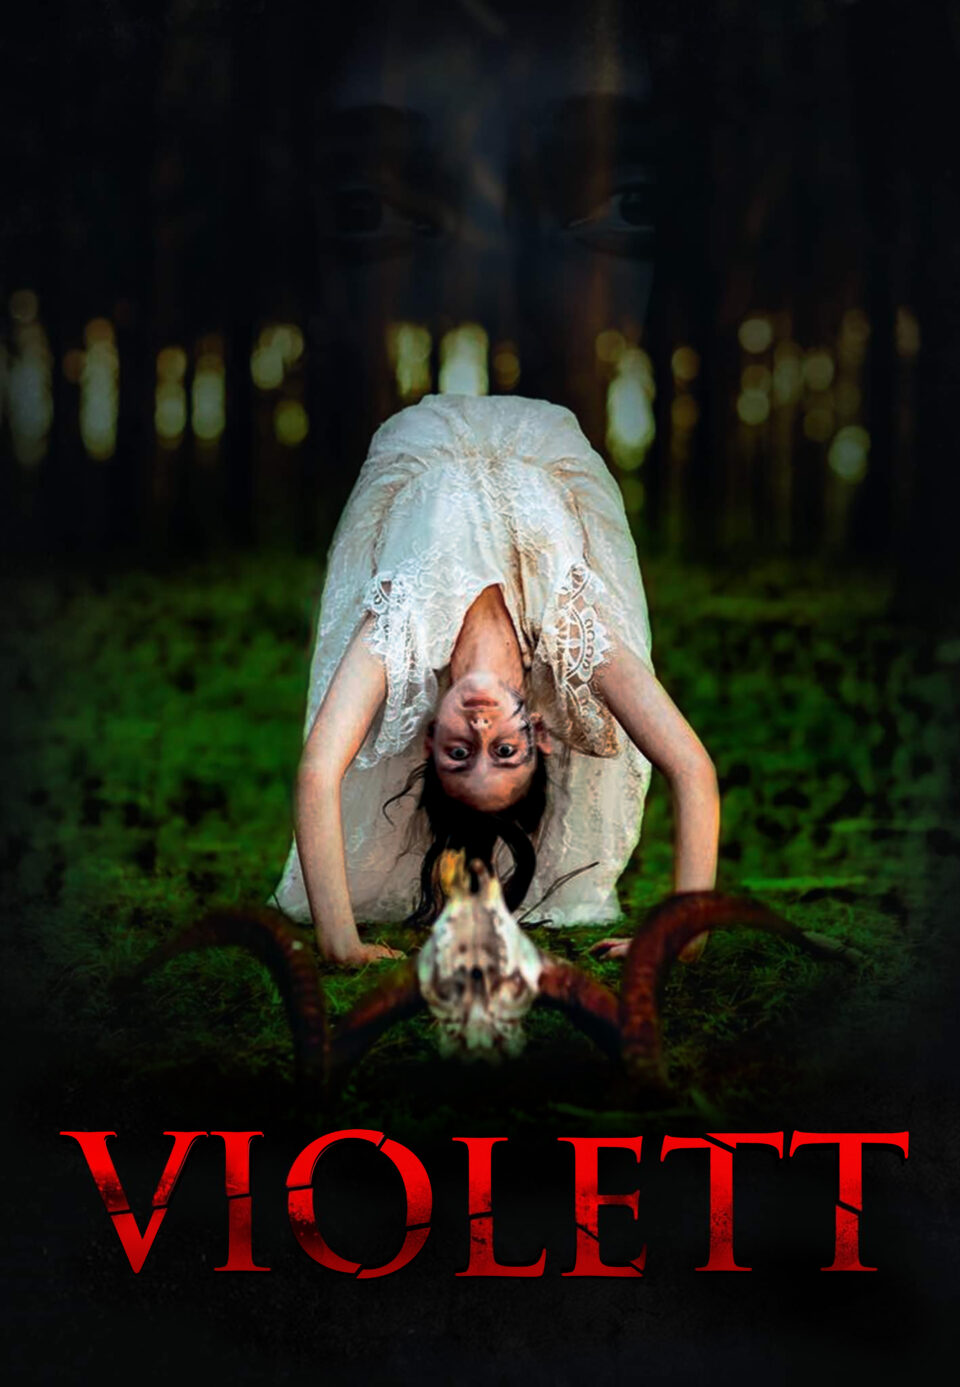 Violett Poster D8 960x1387 - Watch The Trailer for Haunting New Australian Horror Film 'Violett' [Exclusive]